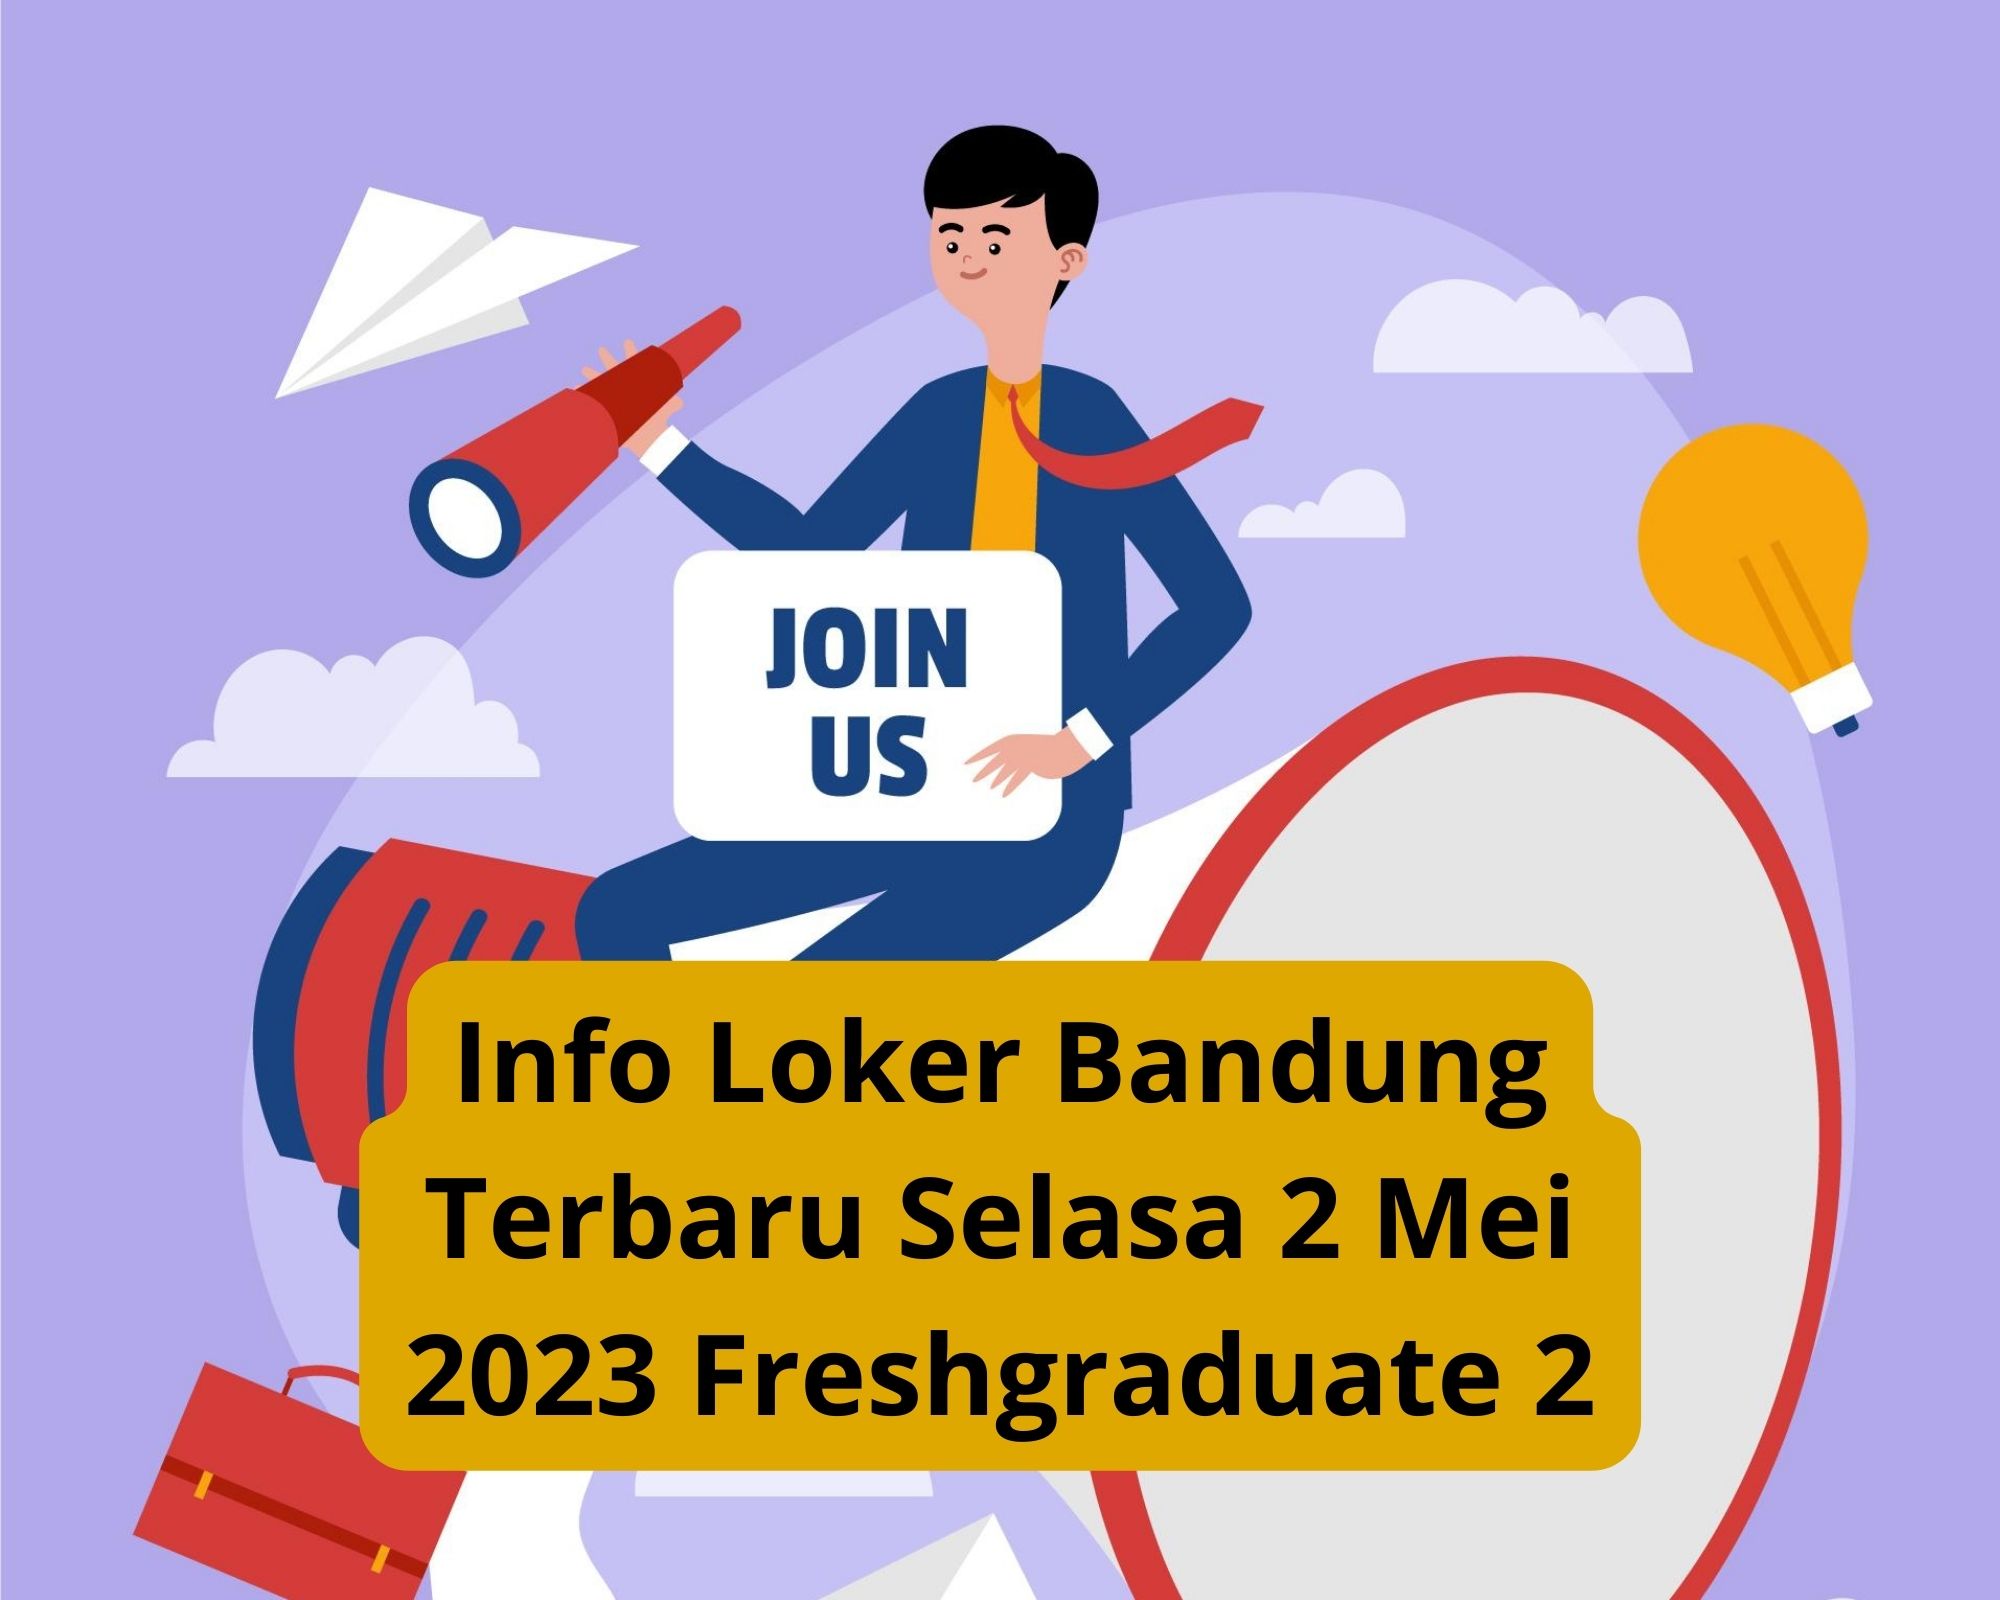 Info Loker Bandung Terbaru Selasa 2 Mei 2023 Freshgraduate 2